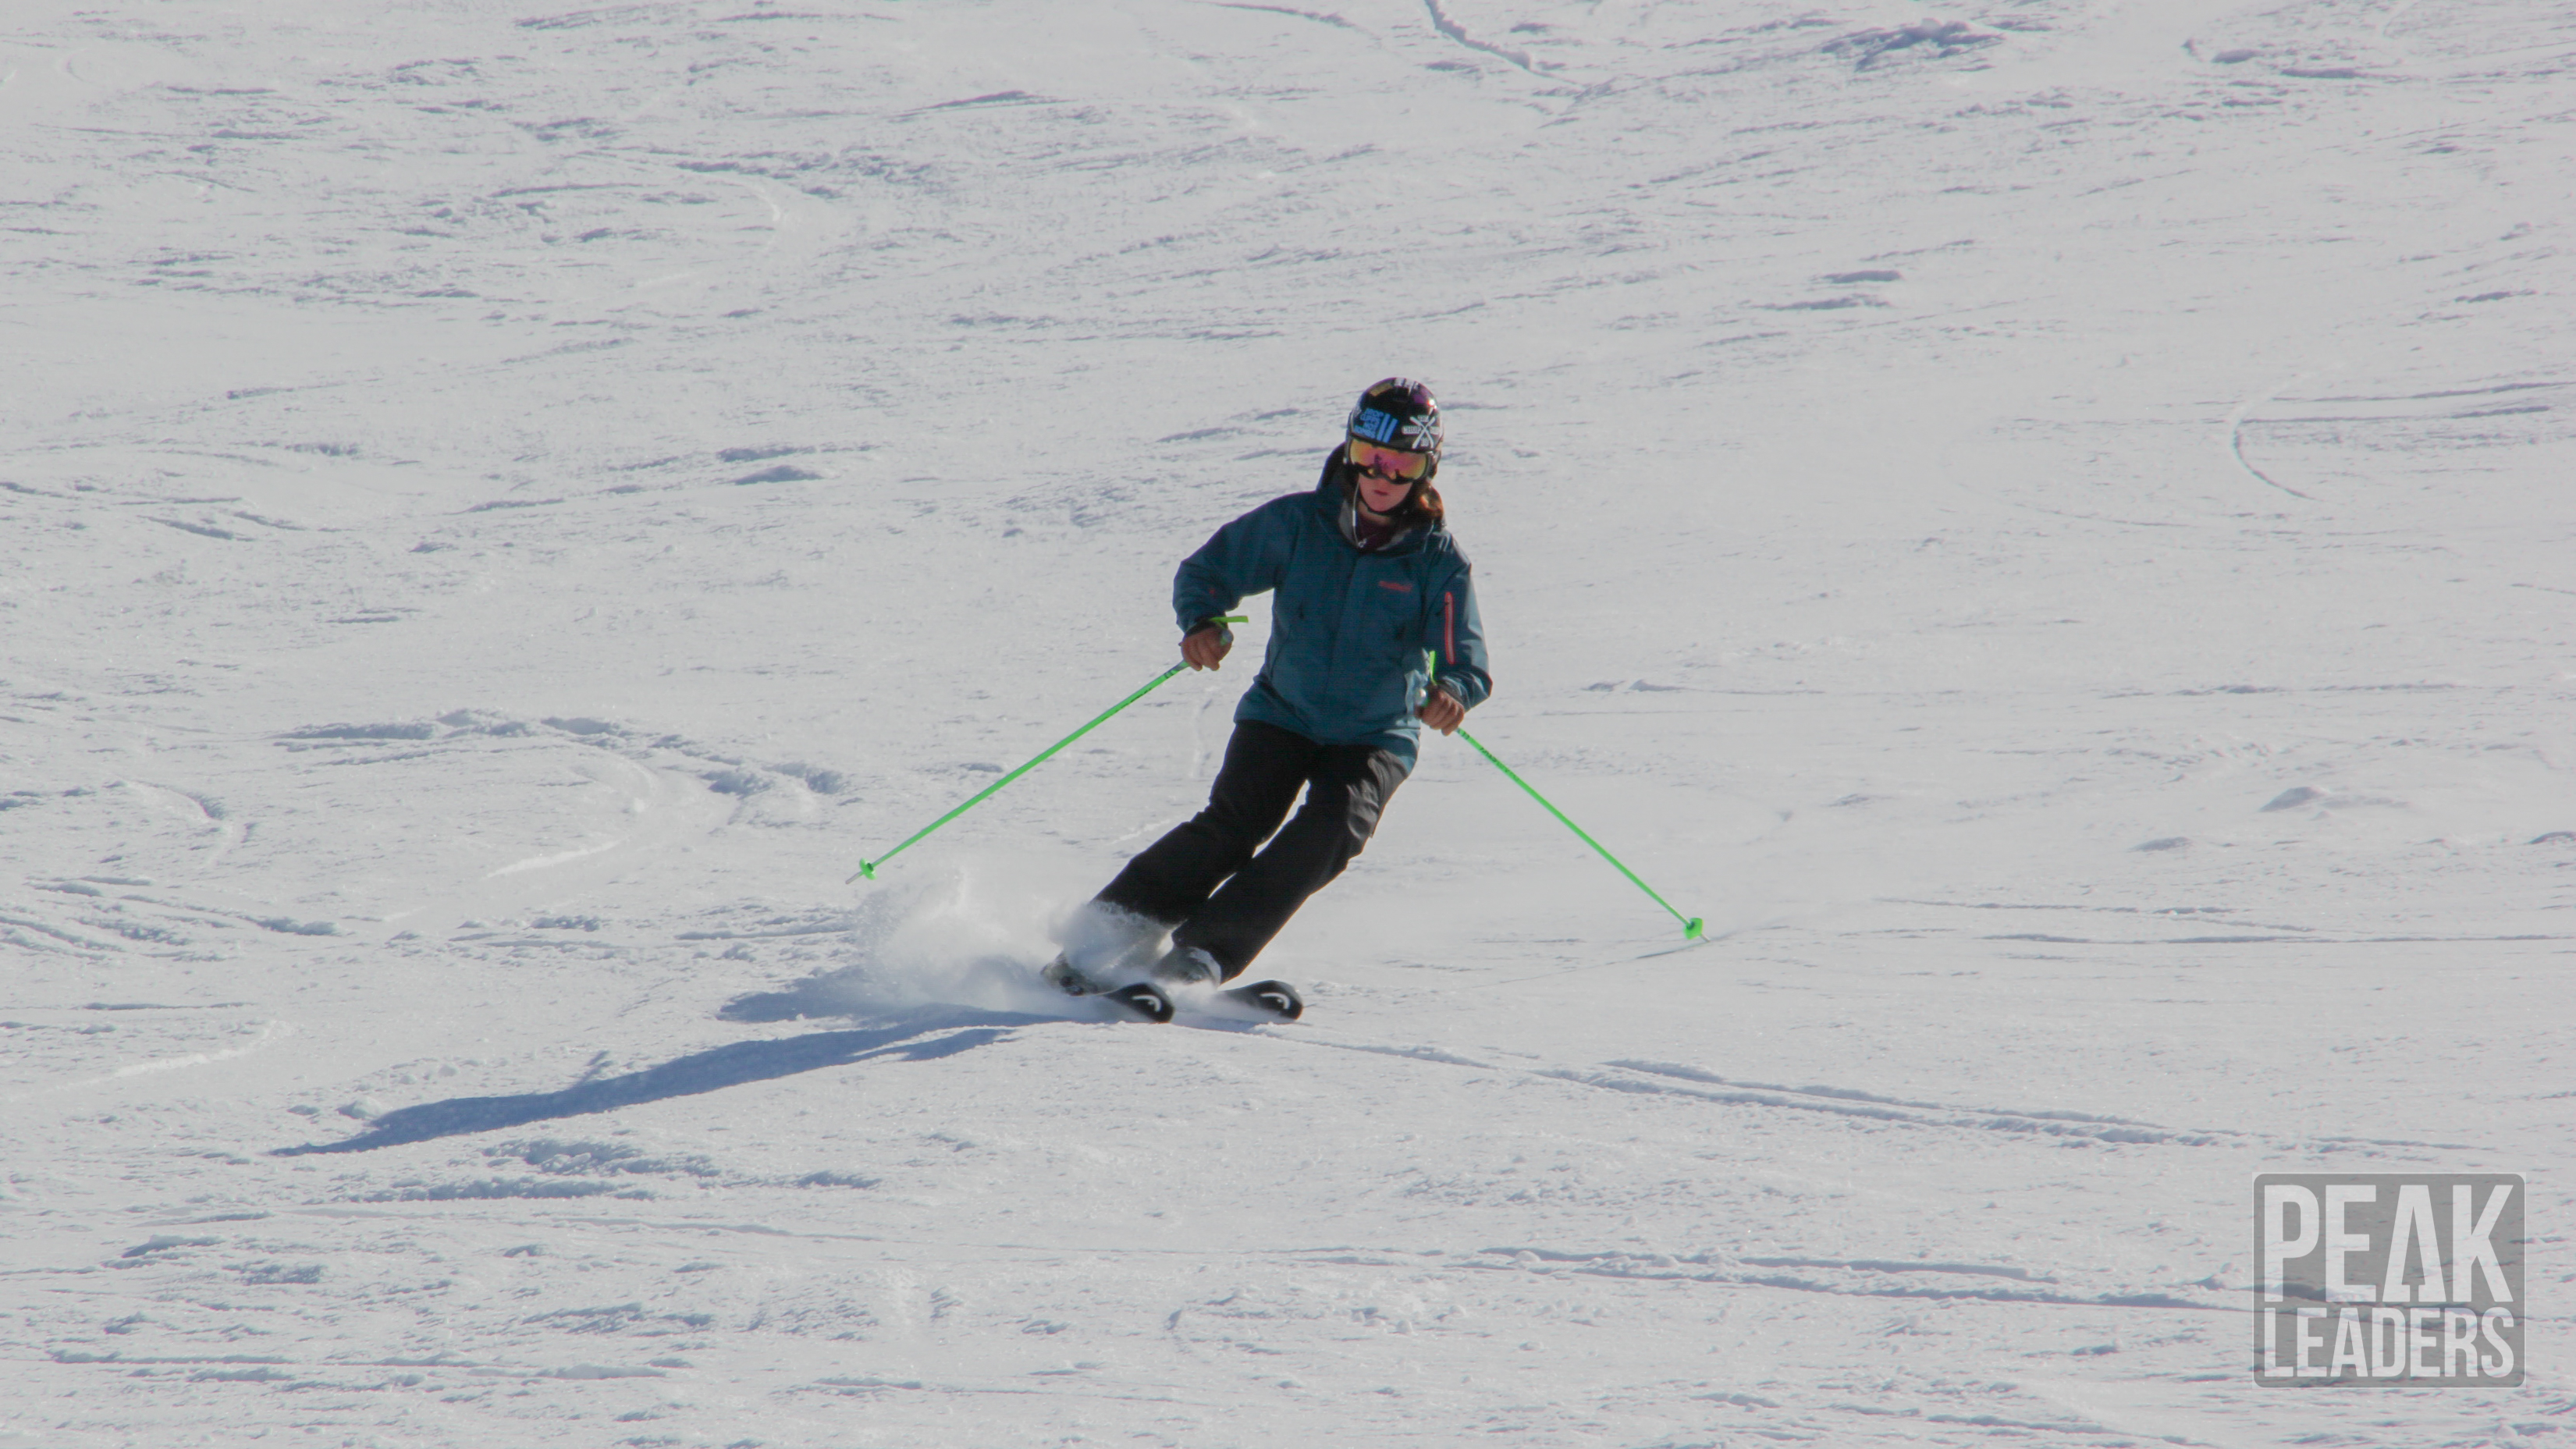 Practicing short radius turns on the skis